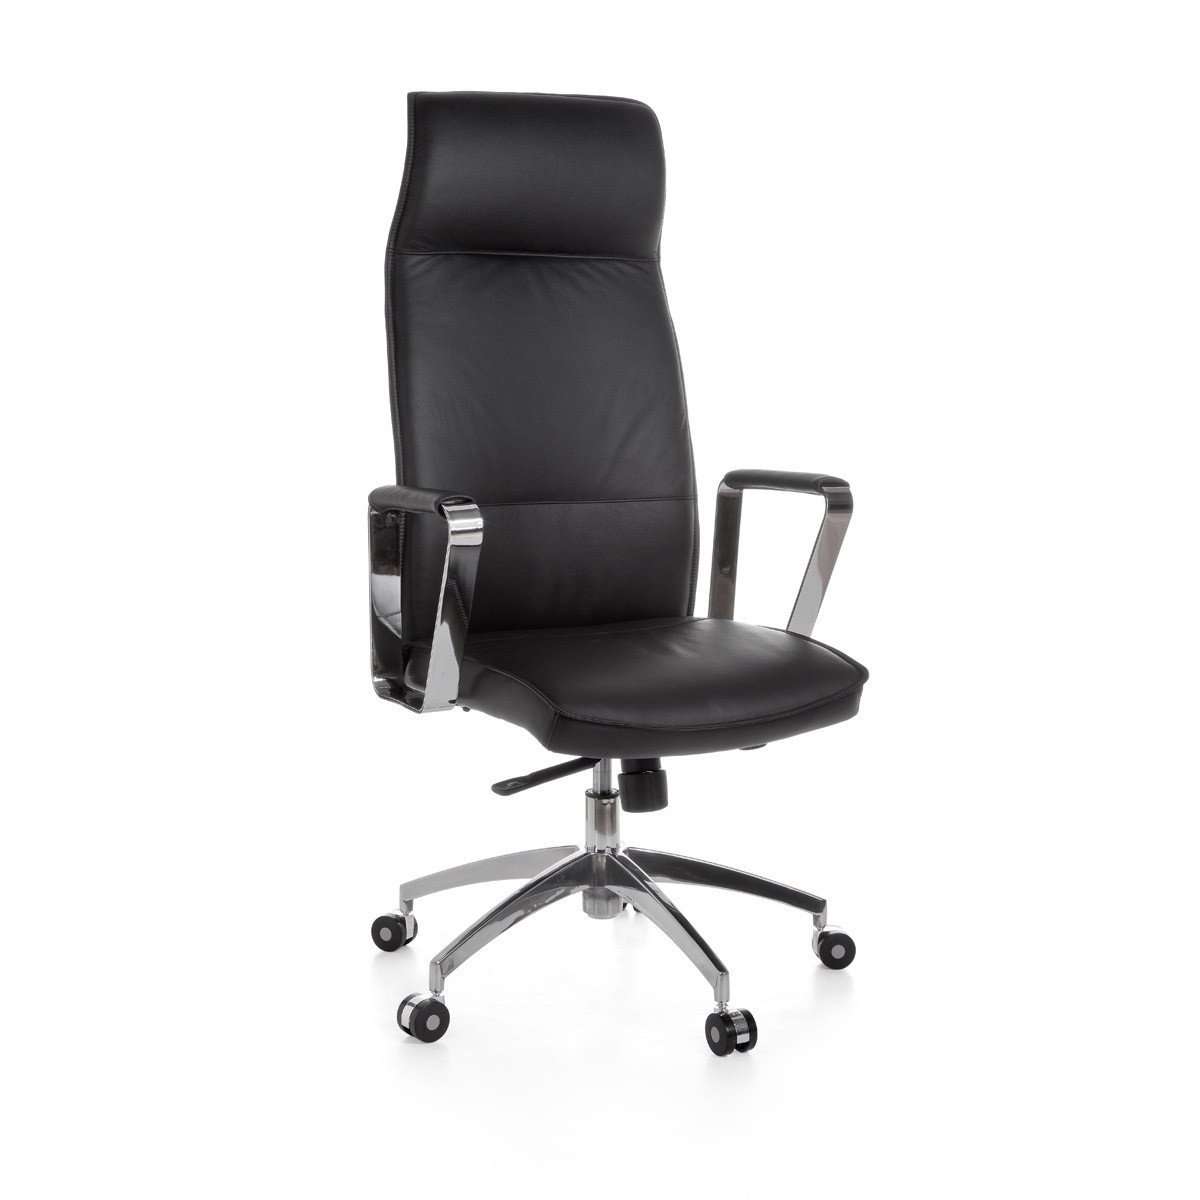 Nancy's Williamsbridge Leather Office Chair - Black Ergonomic Office Chair - Office Chairs For Adults